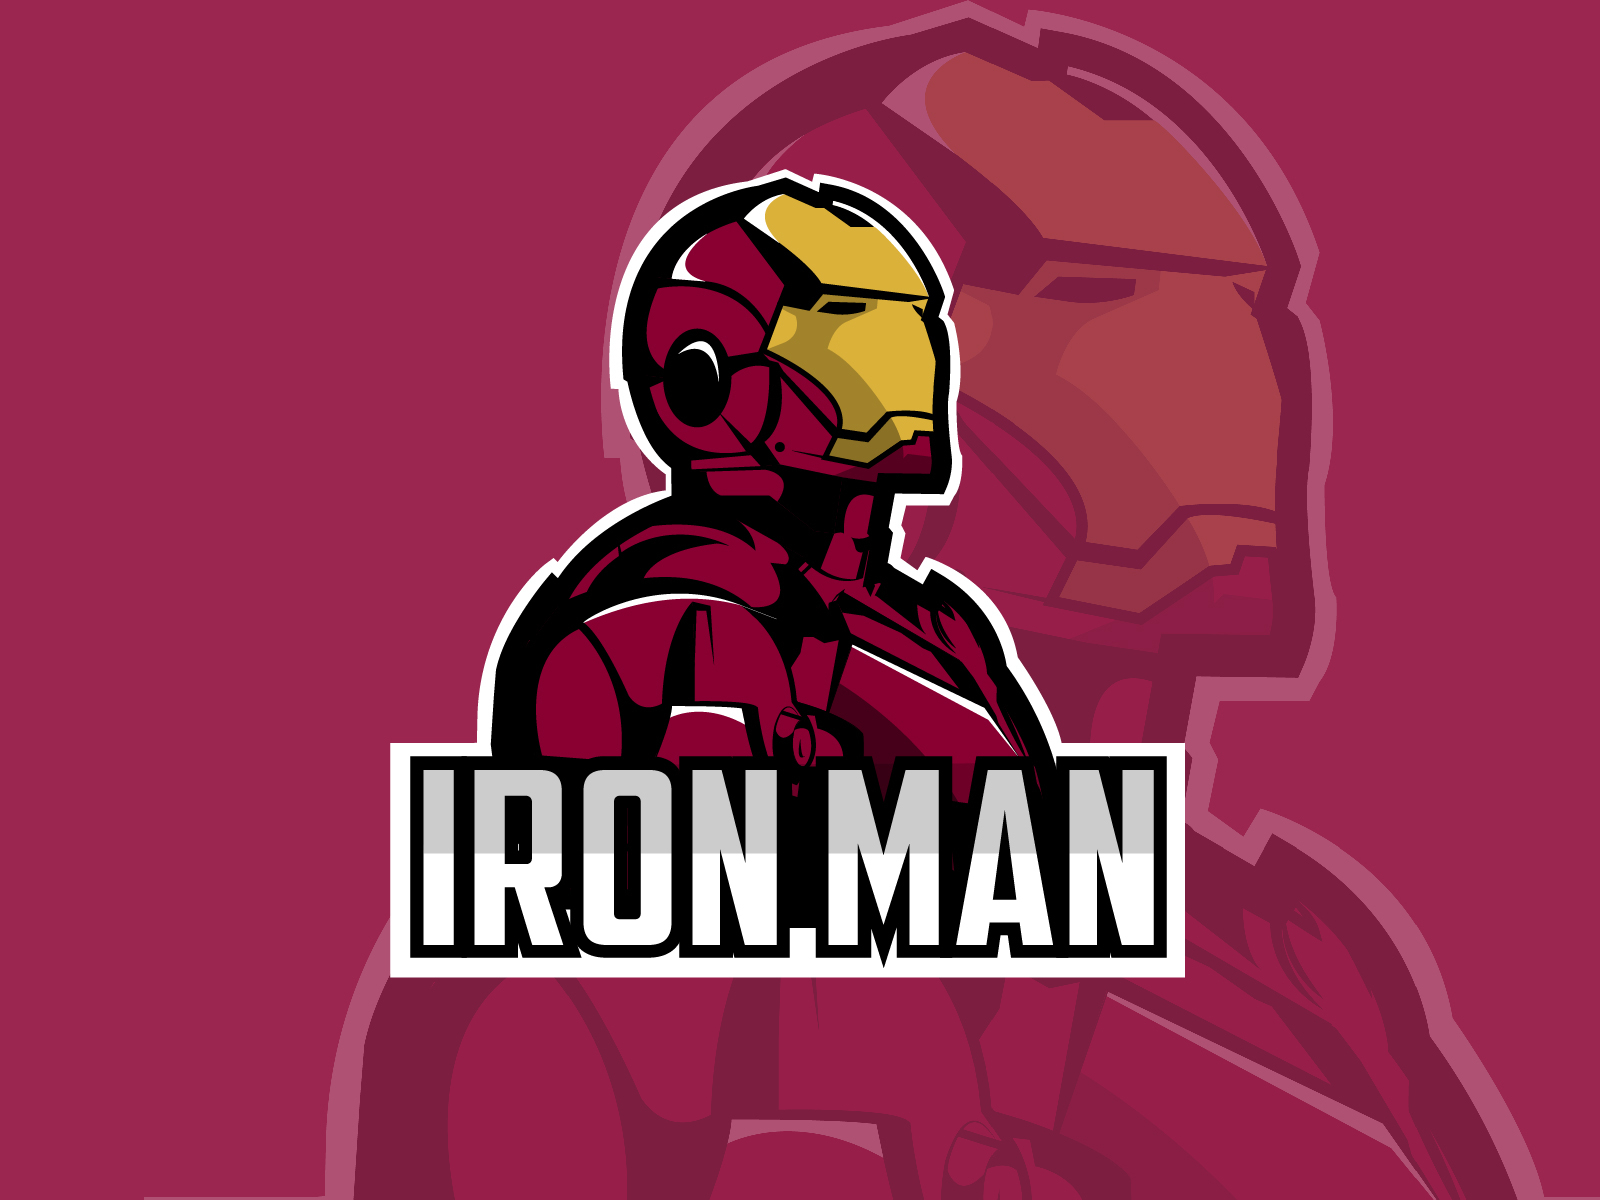 Iron Man logo concept by Kovács Evelin on Dribbble